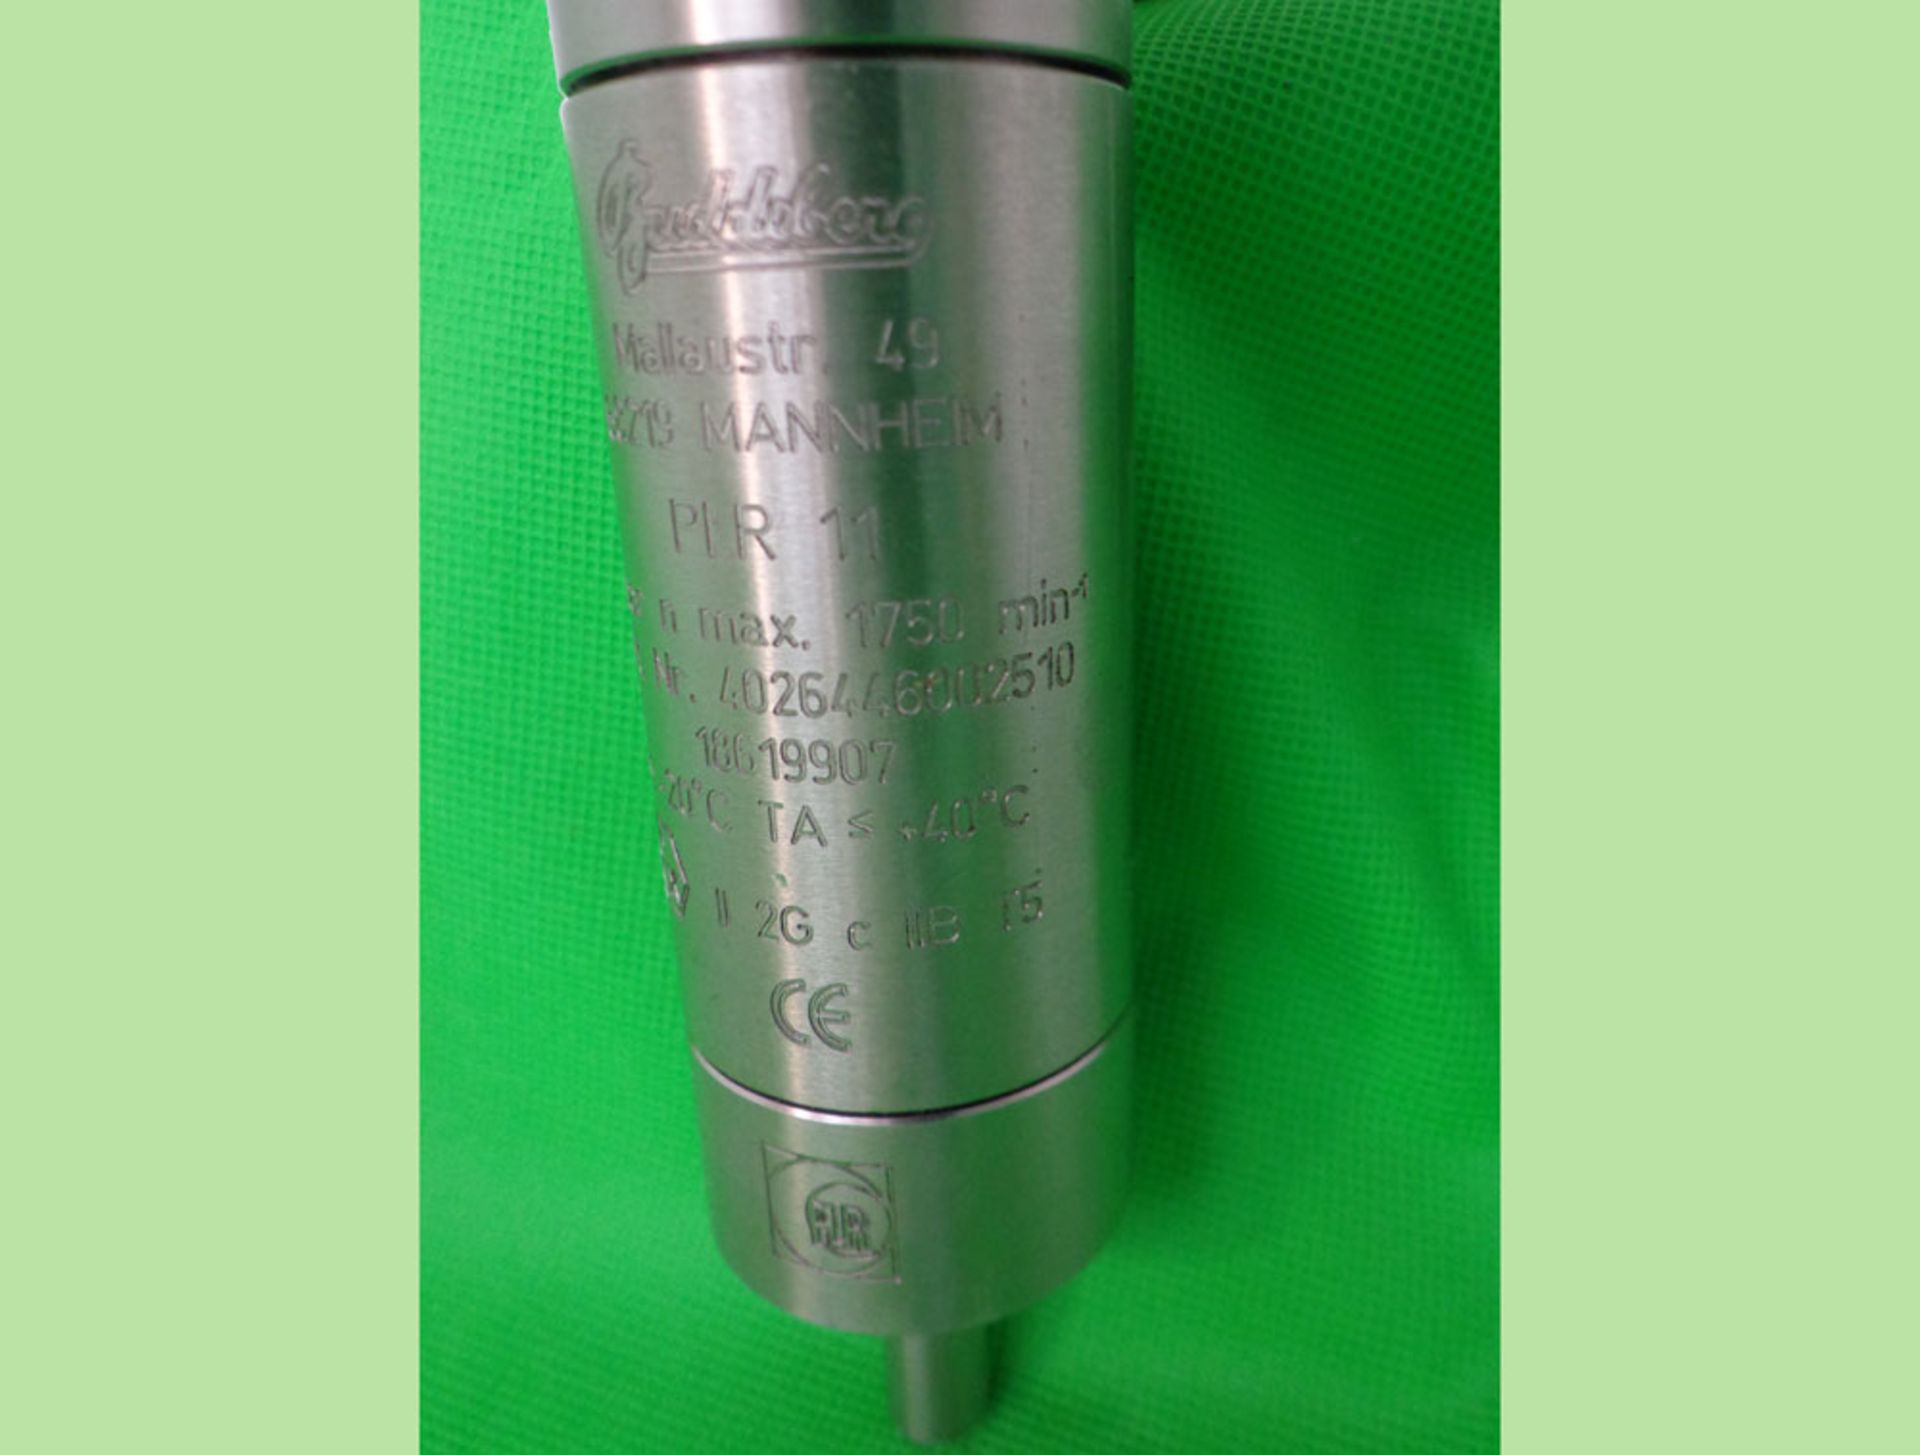 Buddeberg Laboratory Technology PLR 11 Compressed Air Laboratory Stirrer, 4026446002510. - Image 4 of 4